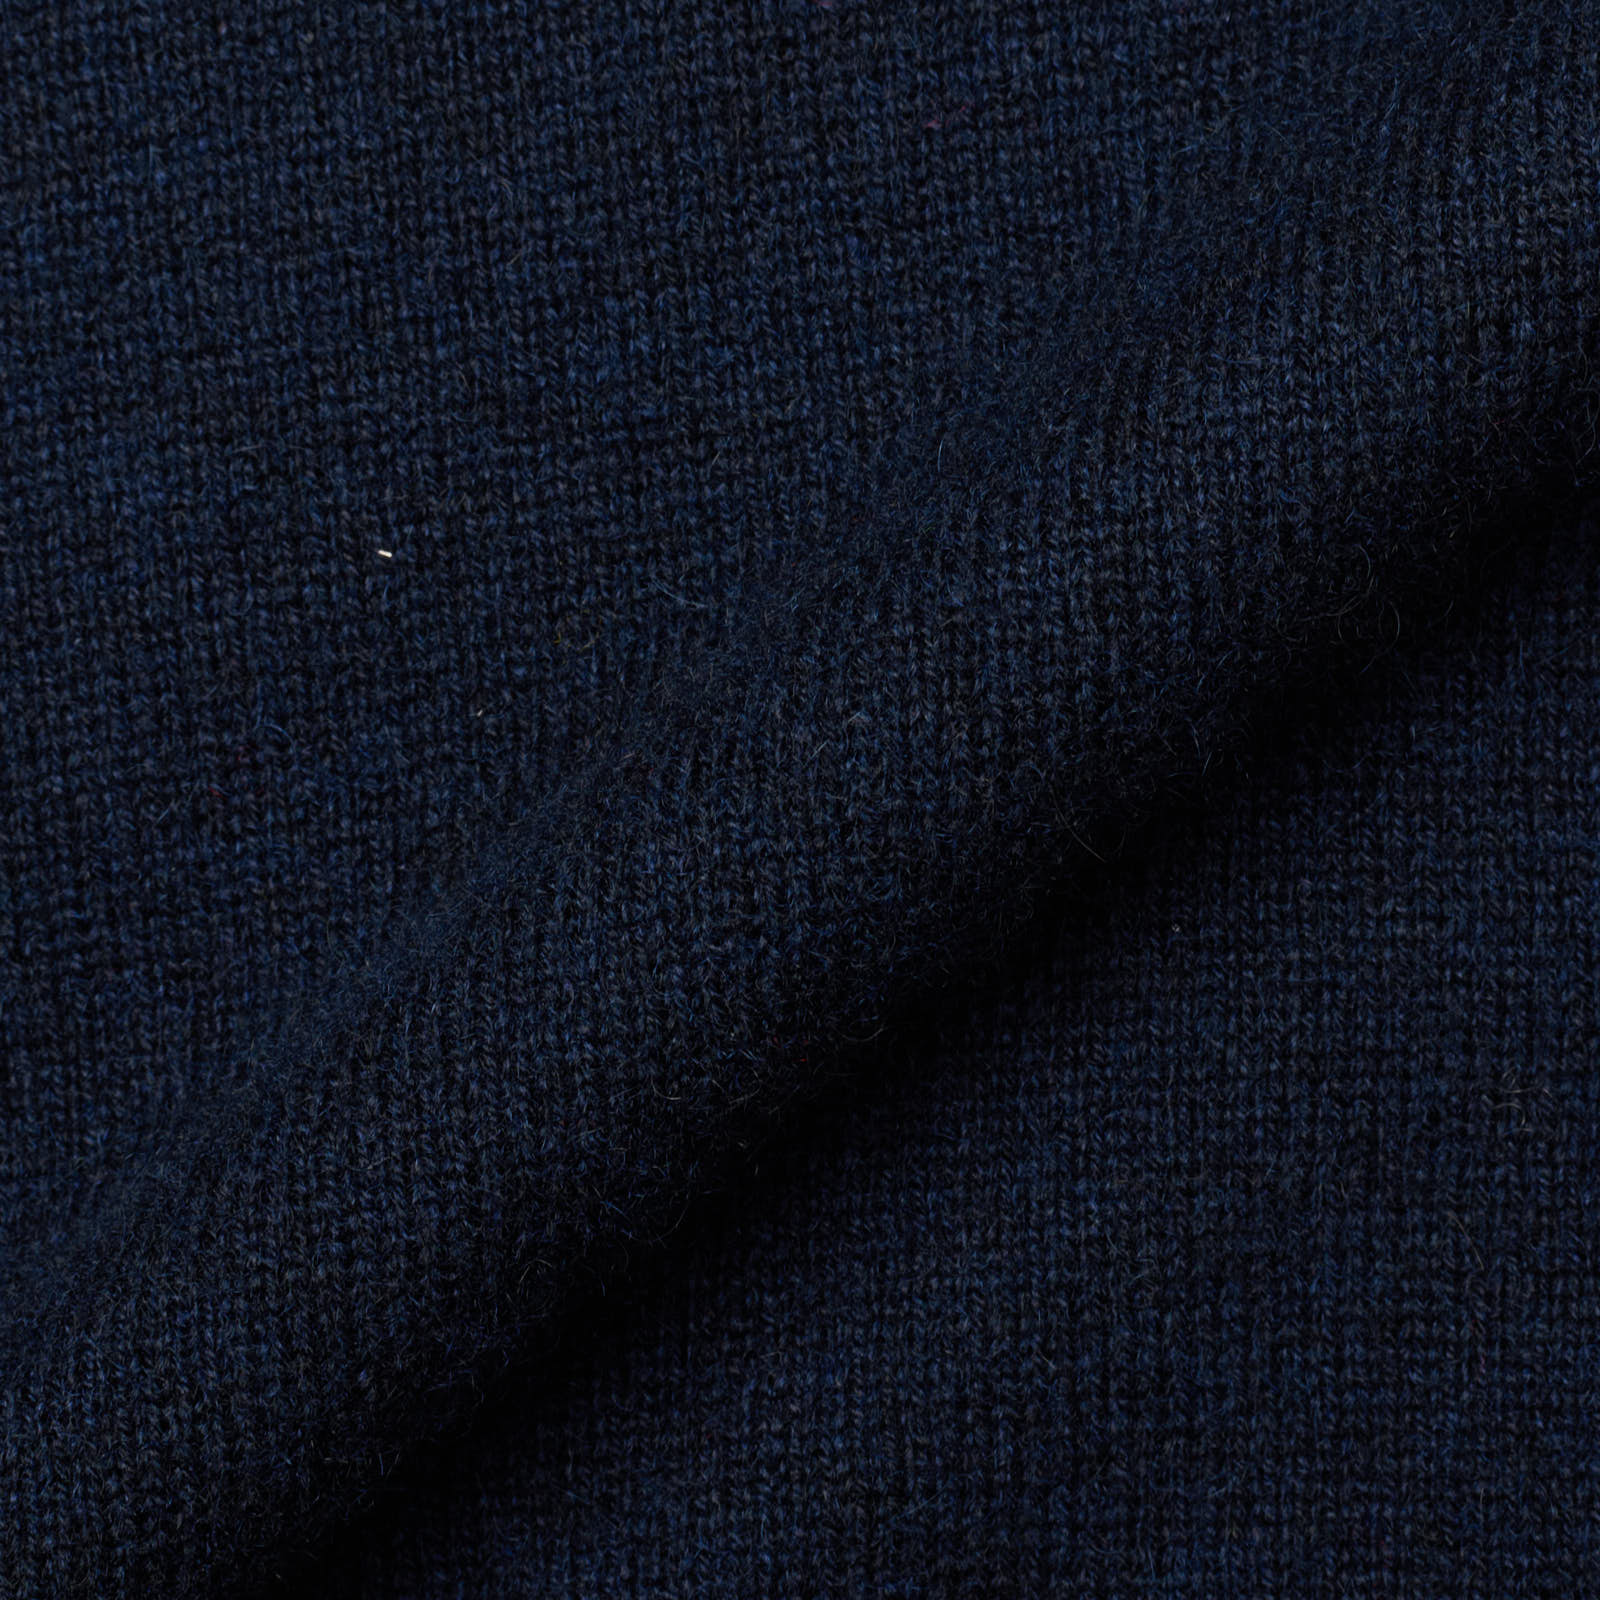 VANNUCCI Milano Navy Blue Cashmere Knit Crewneck Sweater EU 46 NEW US XS